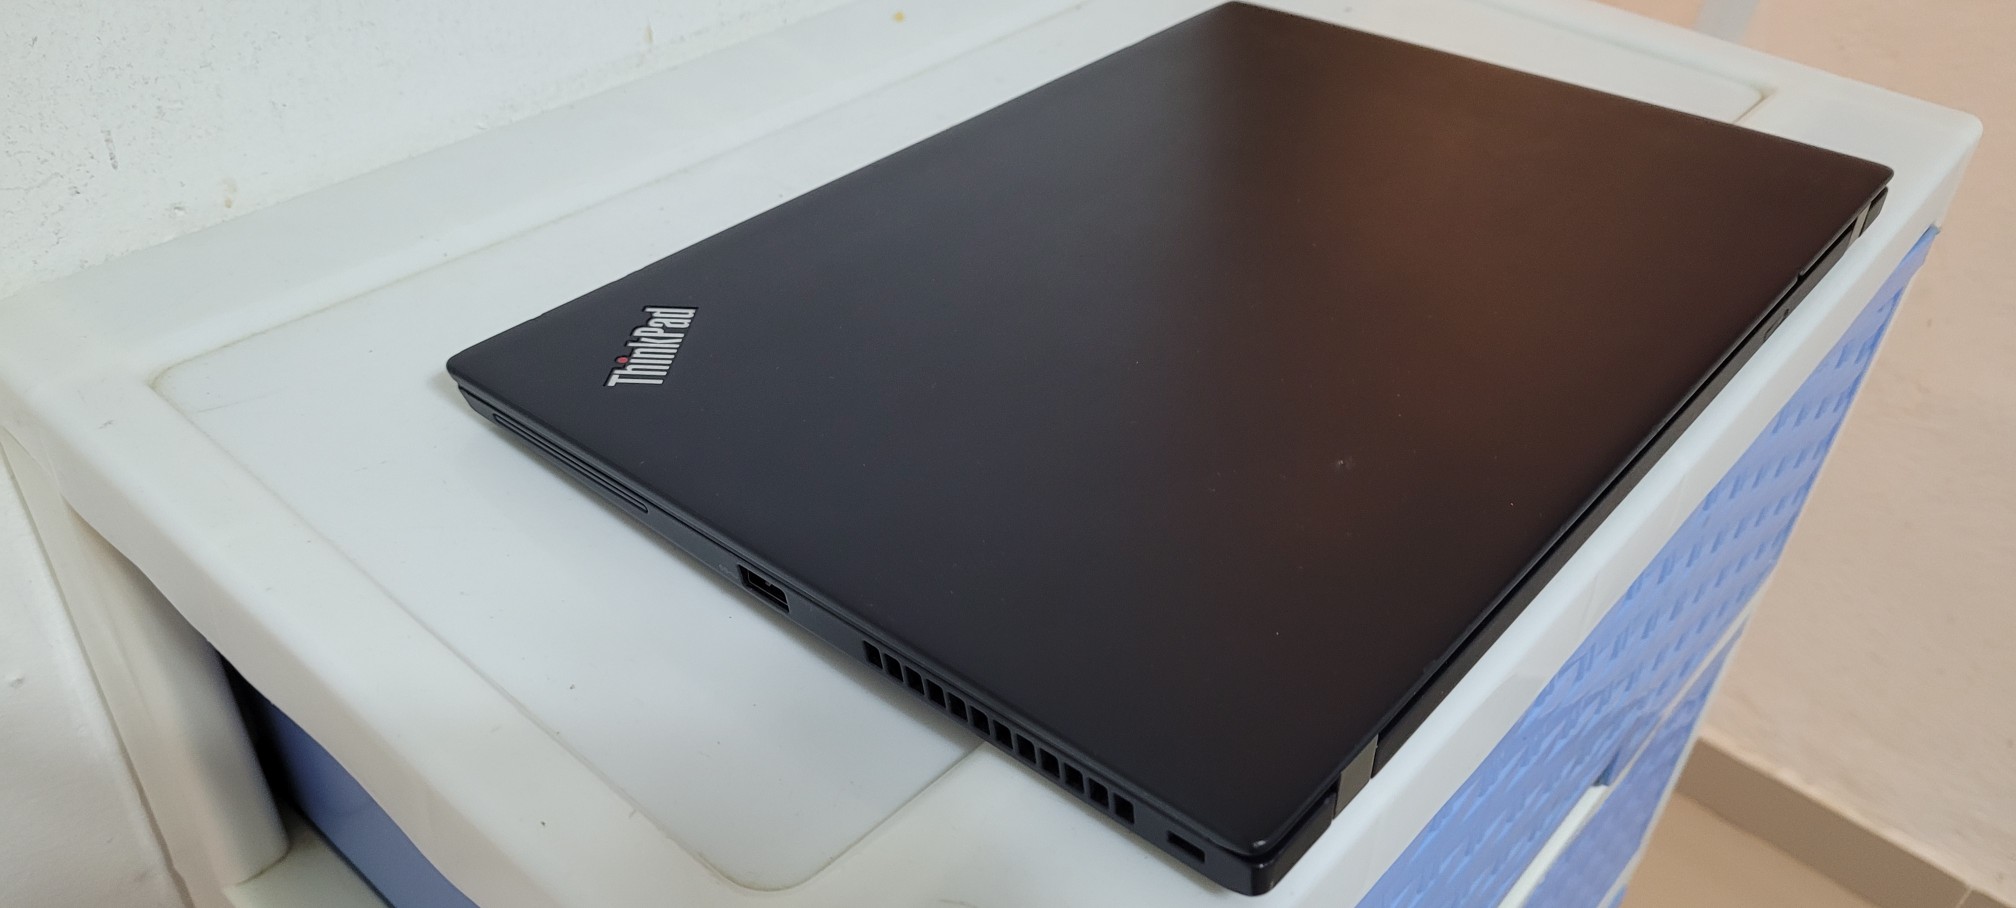 computadoras y laptops - Lenovo Slim t480 14 Pulg Core i5 8va Ram 8gb Disco 256gb Solido hd 2